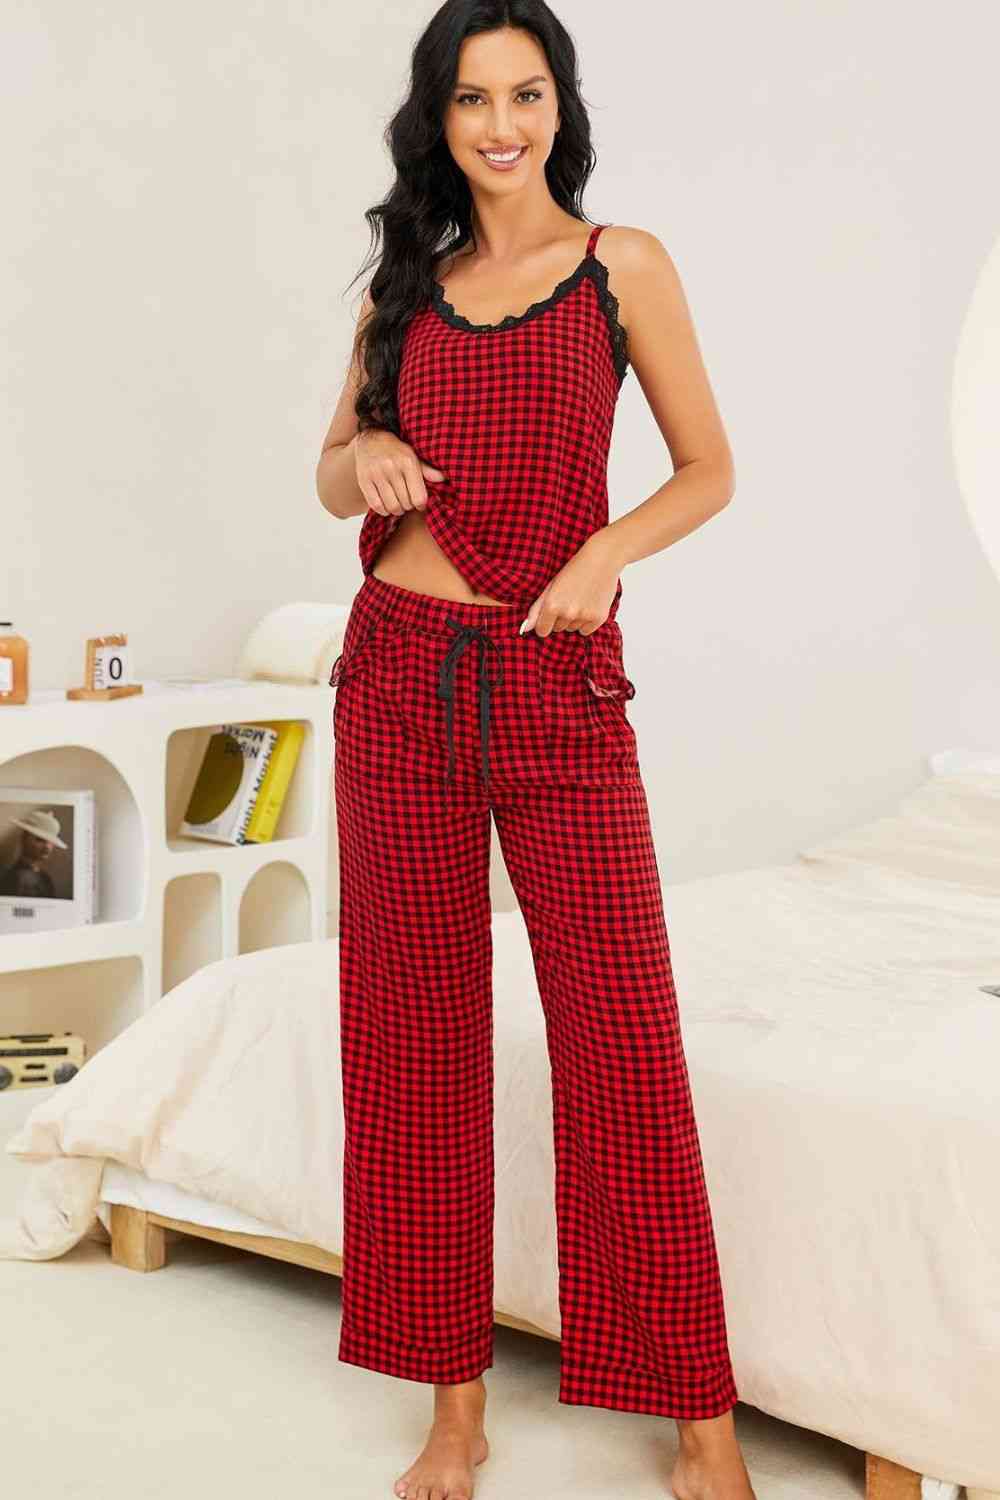 Trendsi Plaid / S Plaid Lace Trim Cami and Drawstring Pants Pajama Set 100100550487575 Apparel & Accessories > Clothing > Dresses